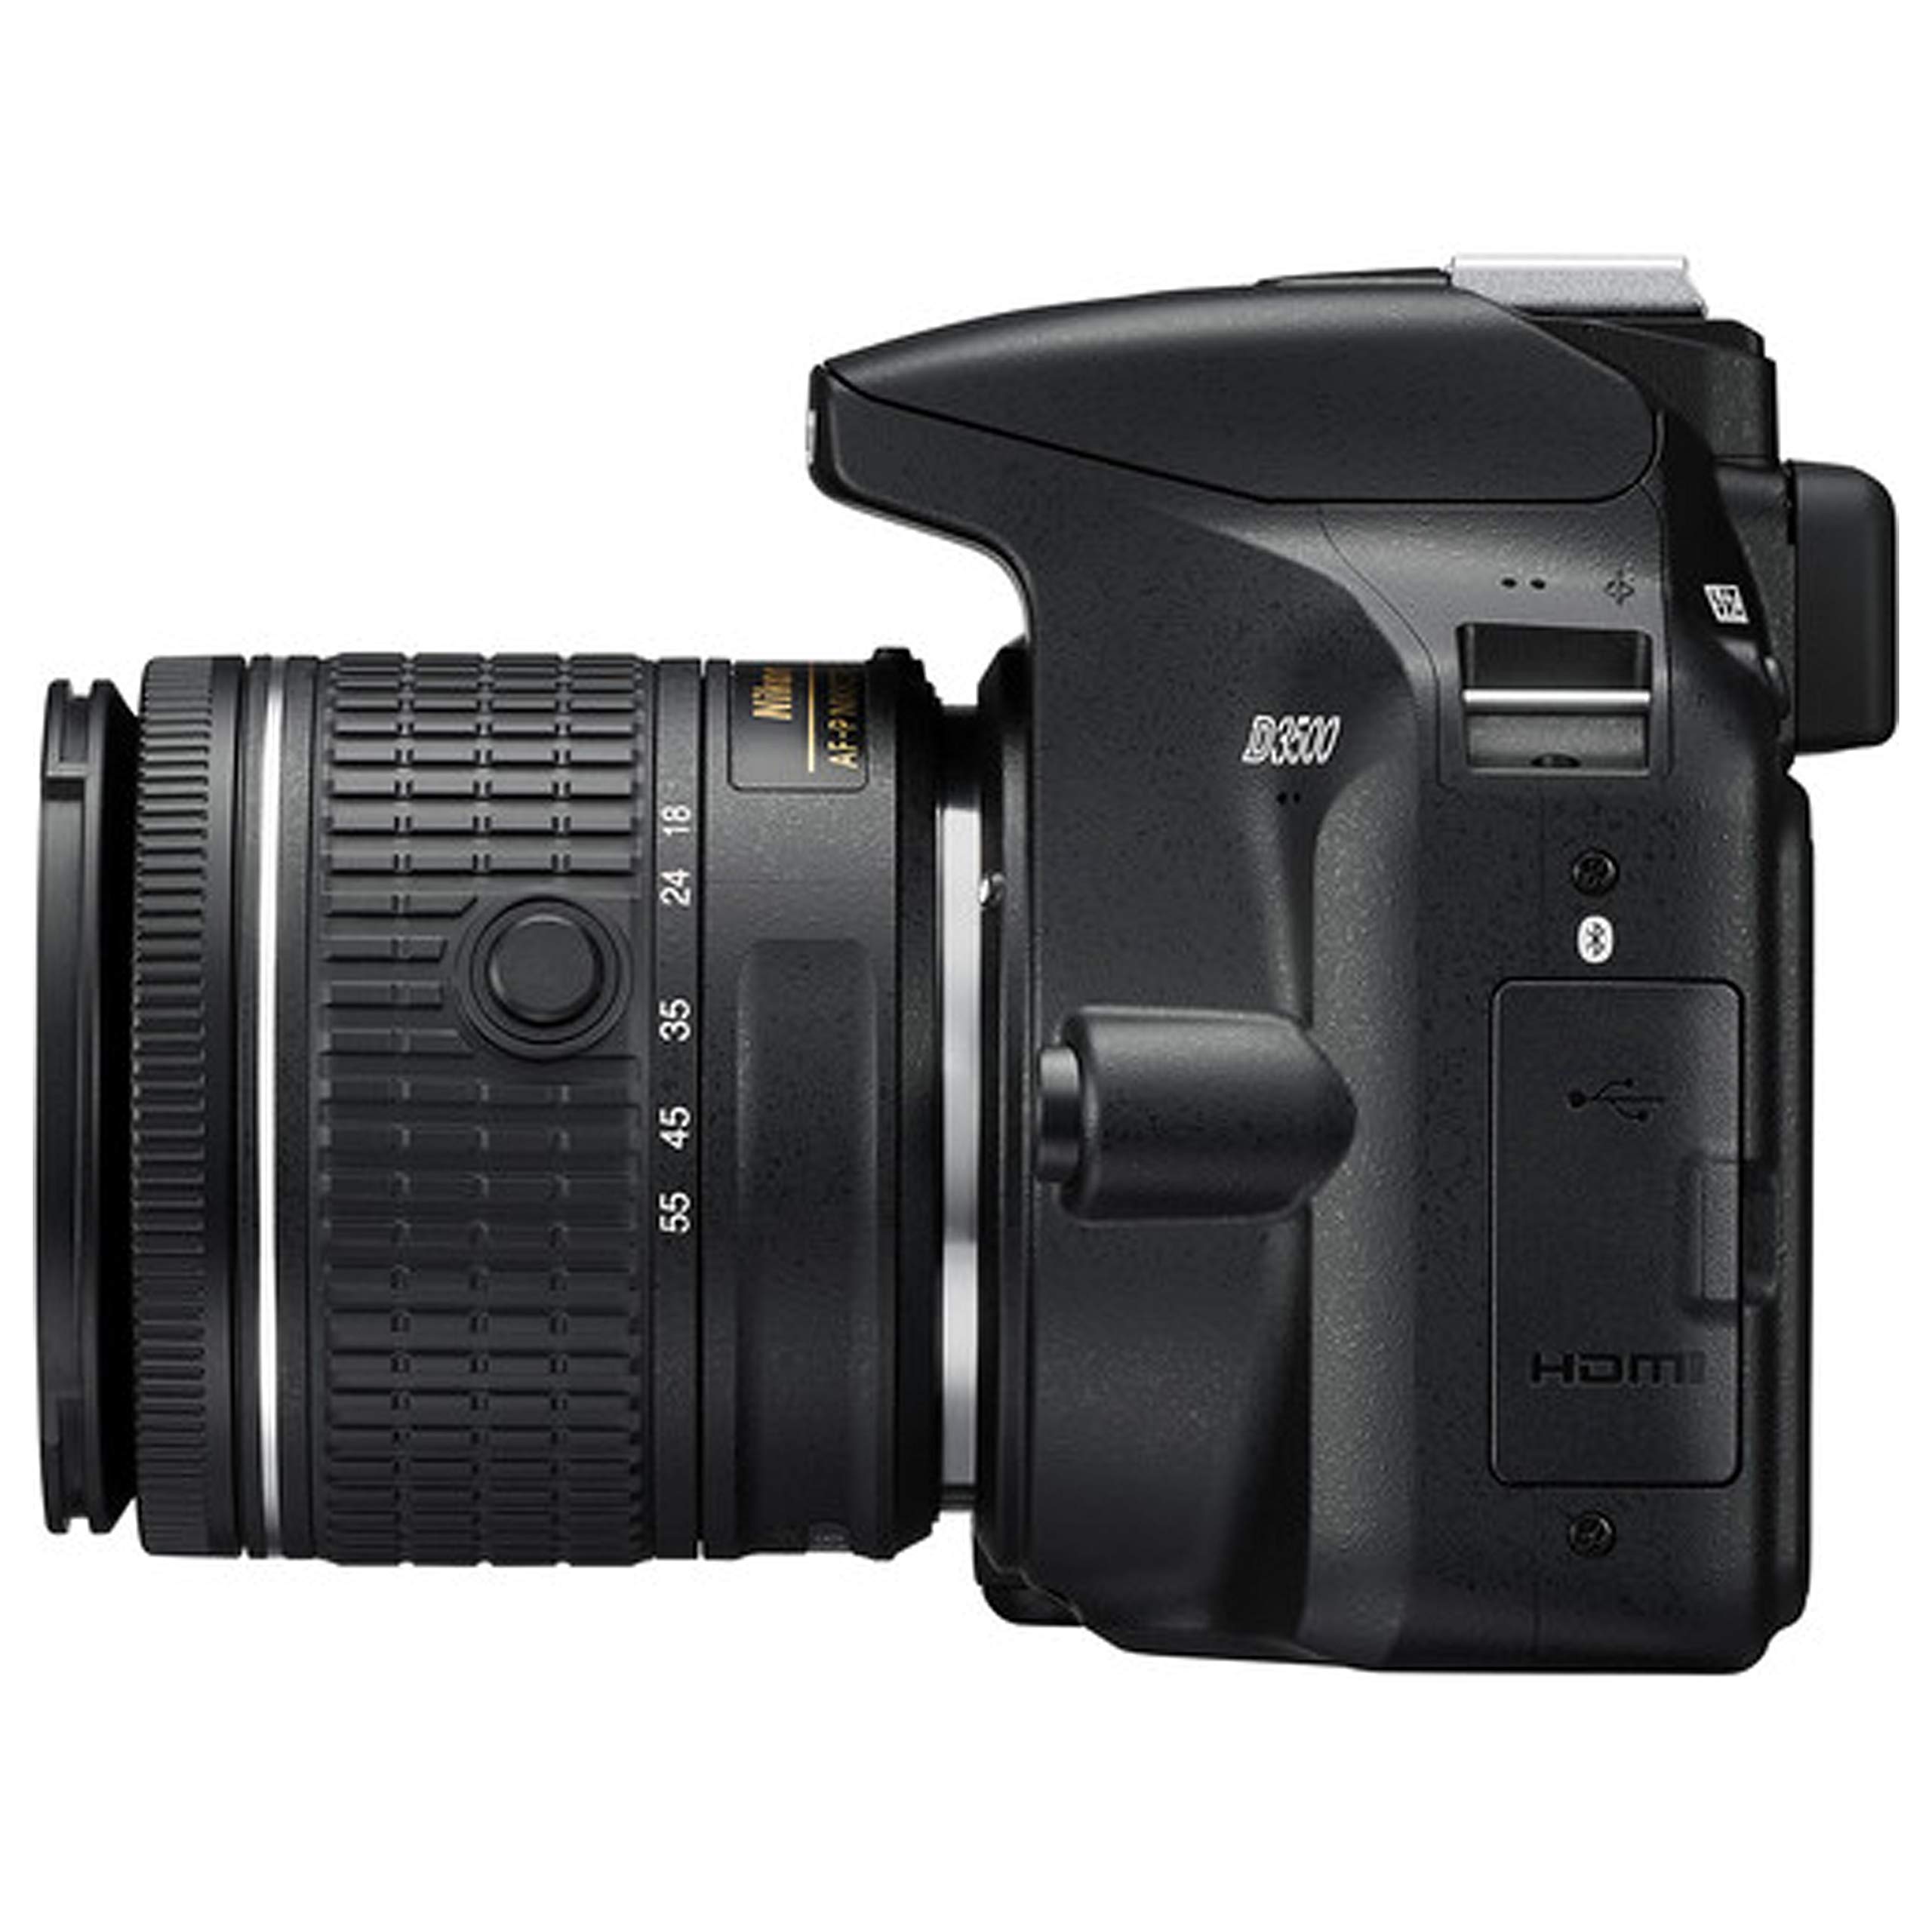 Nikon intl D3500 DSLR Camera Bundle with 18-55mm VR Lens - Built-in Wi-Fi-24.2 MP CMOS Sensor - -EXPEED 4 Image Processor and Full HD Videos64GB Memory(17pcs)